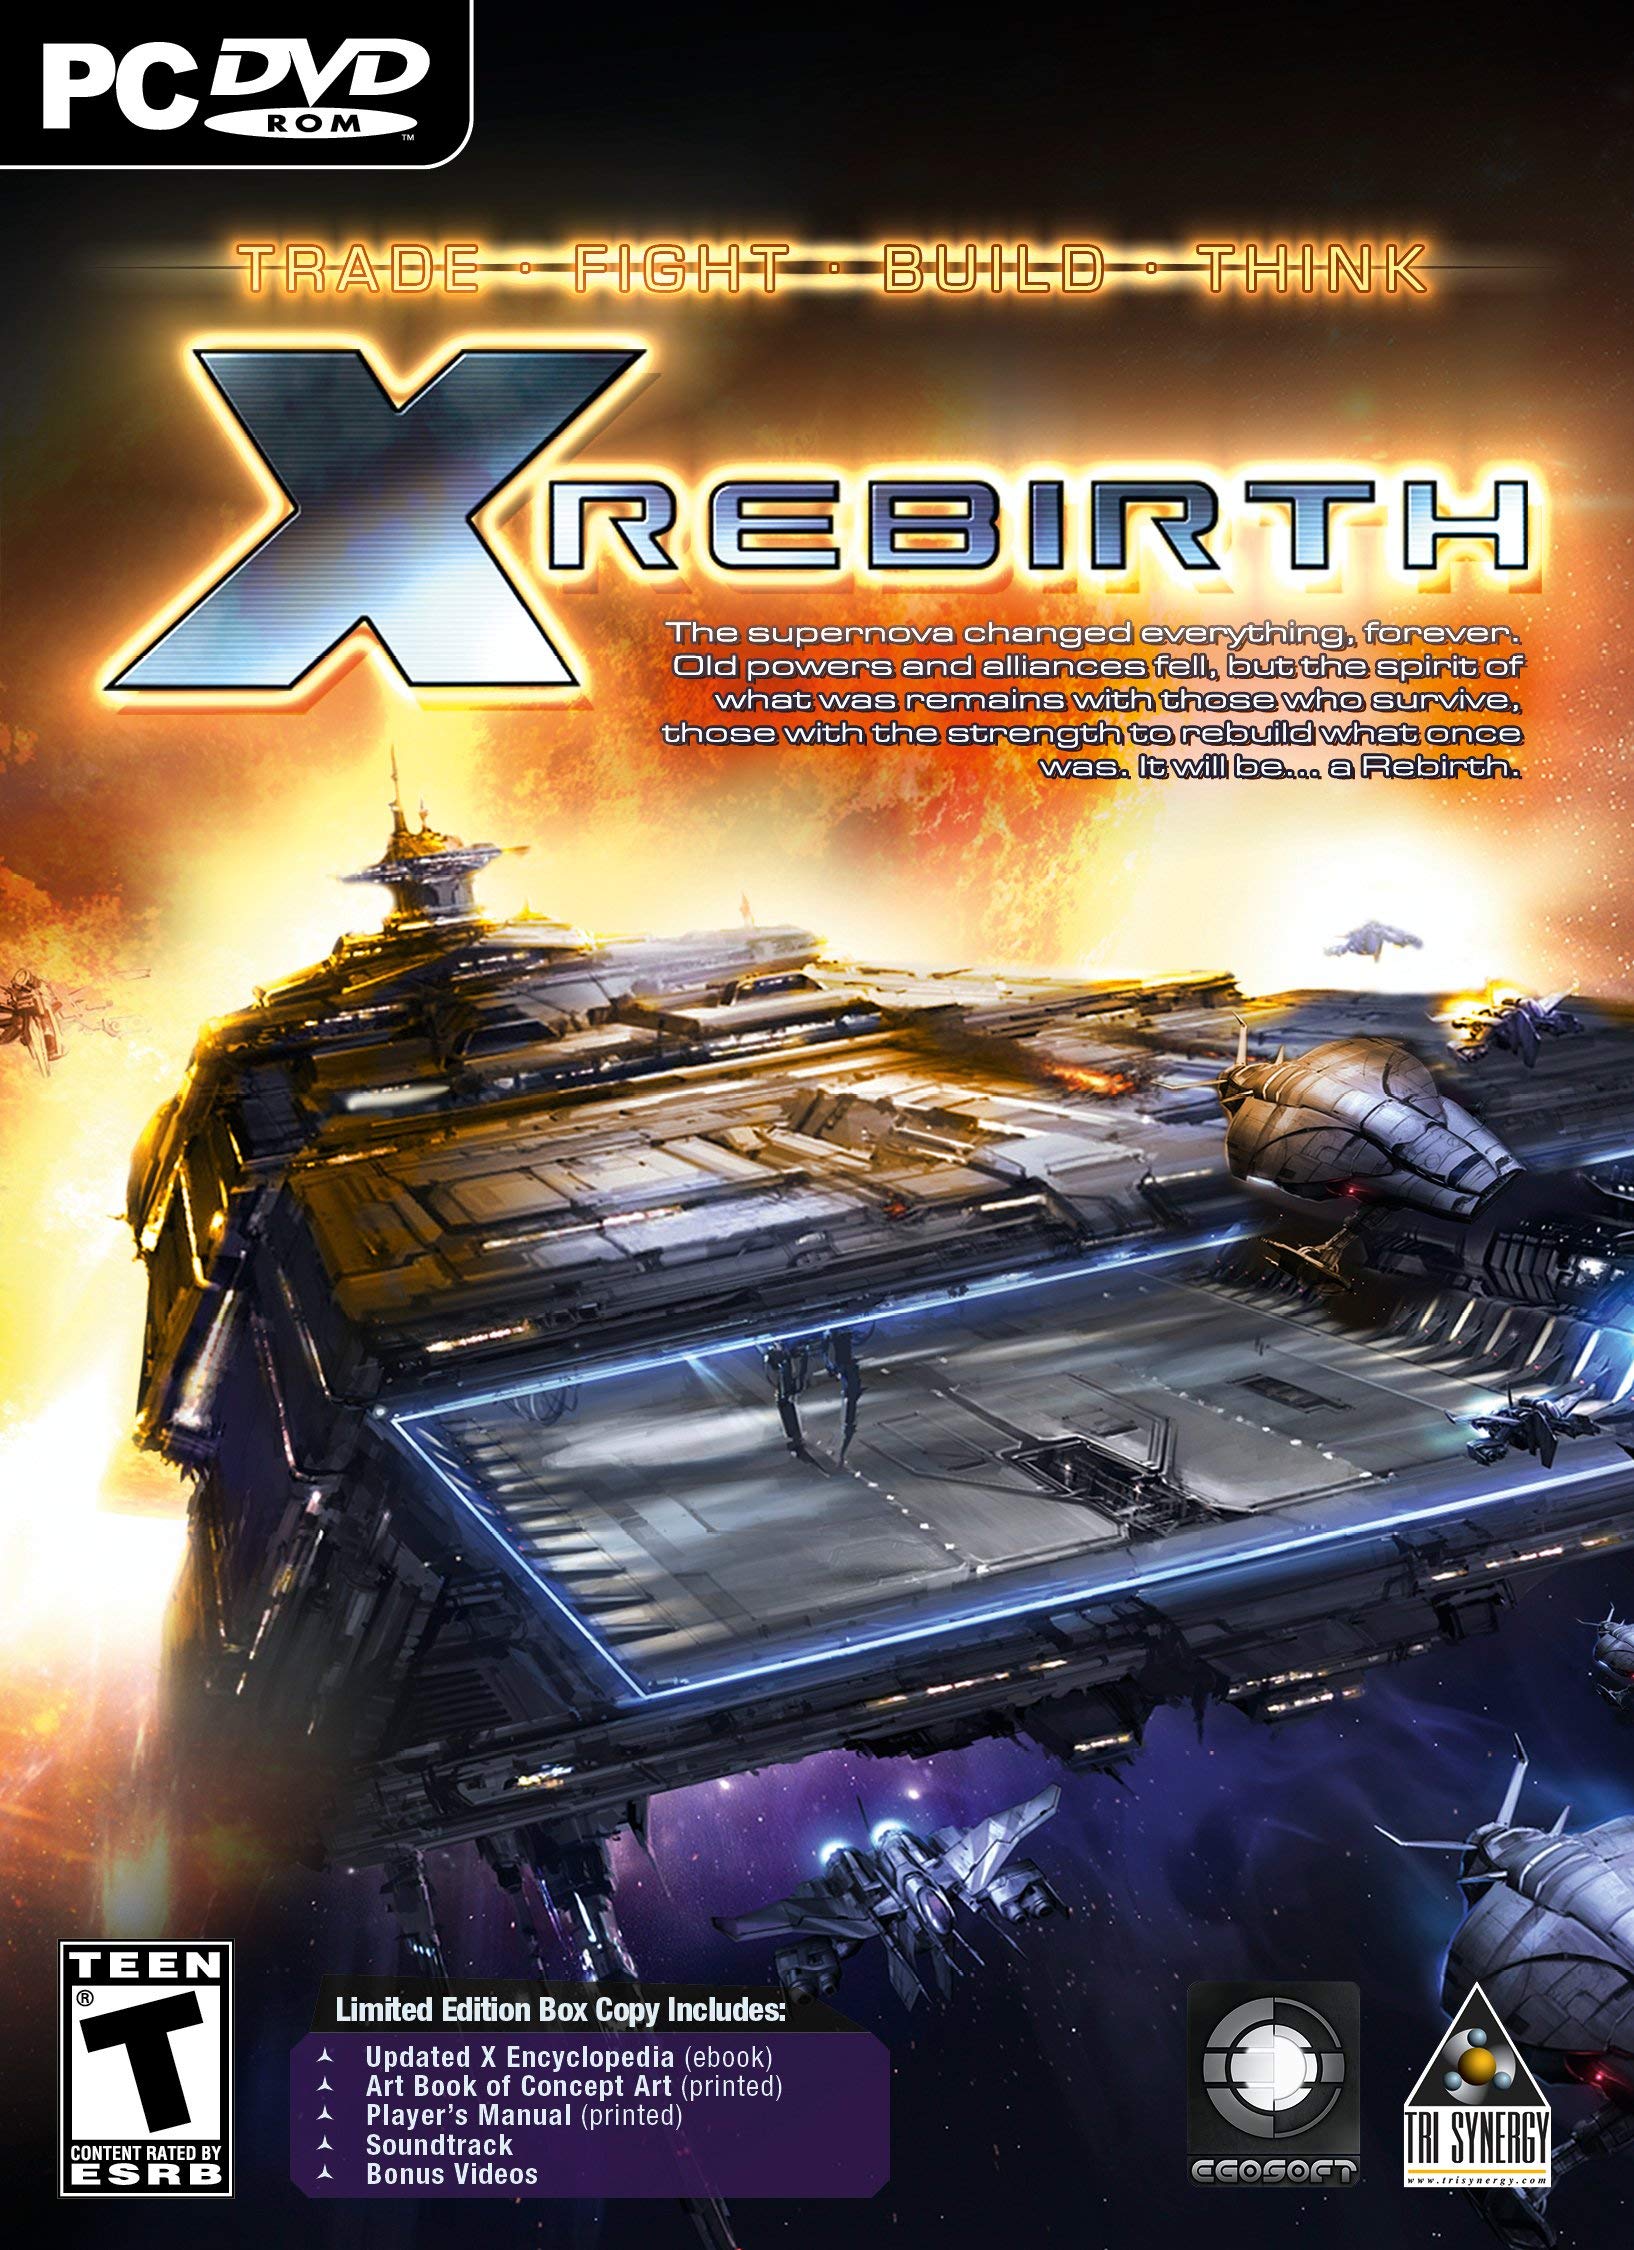 x rebirth graphics mod